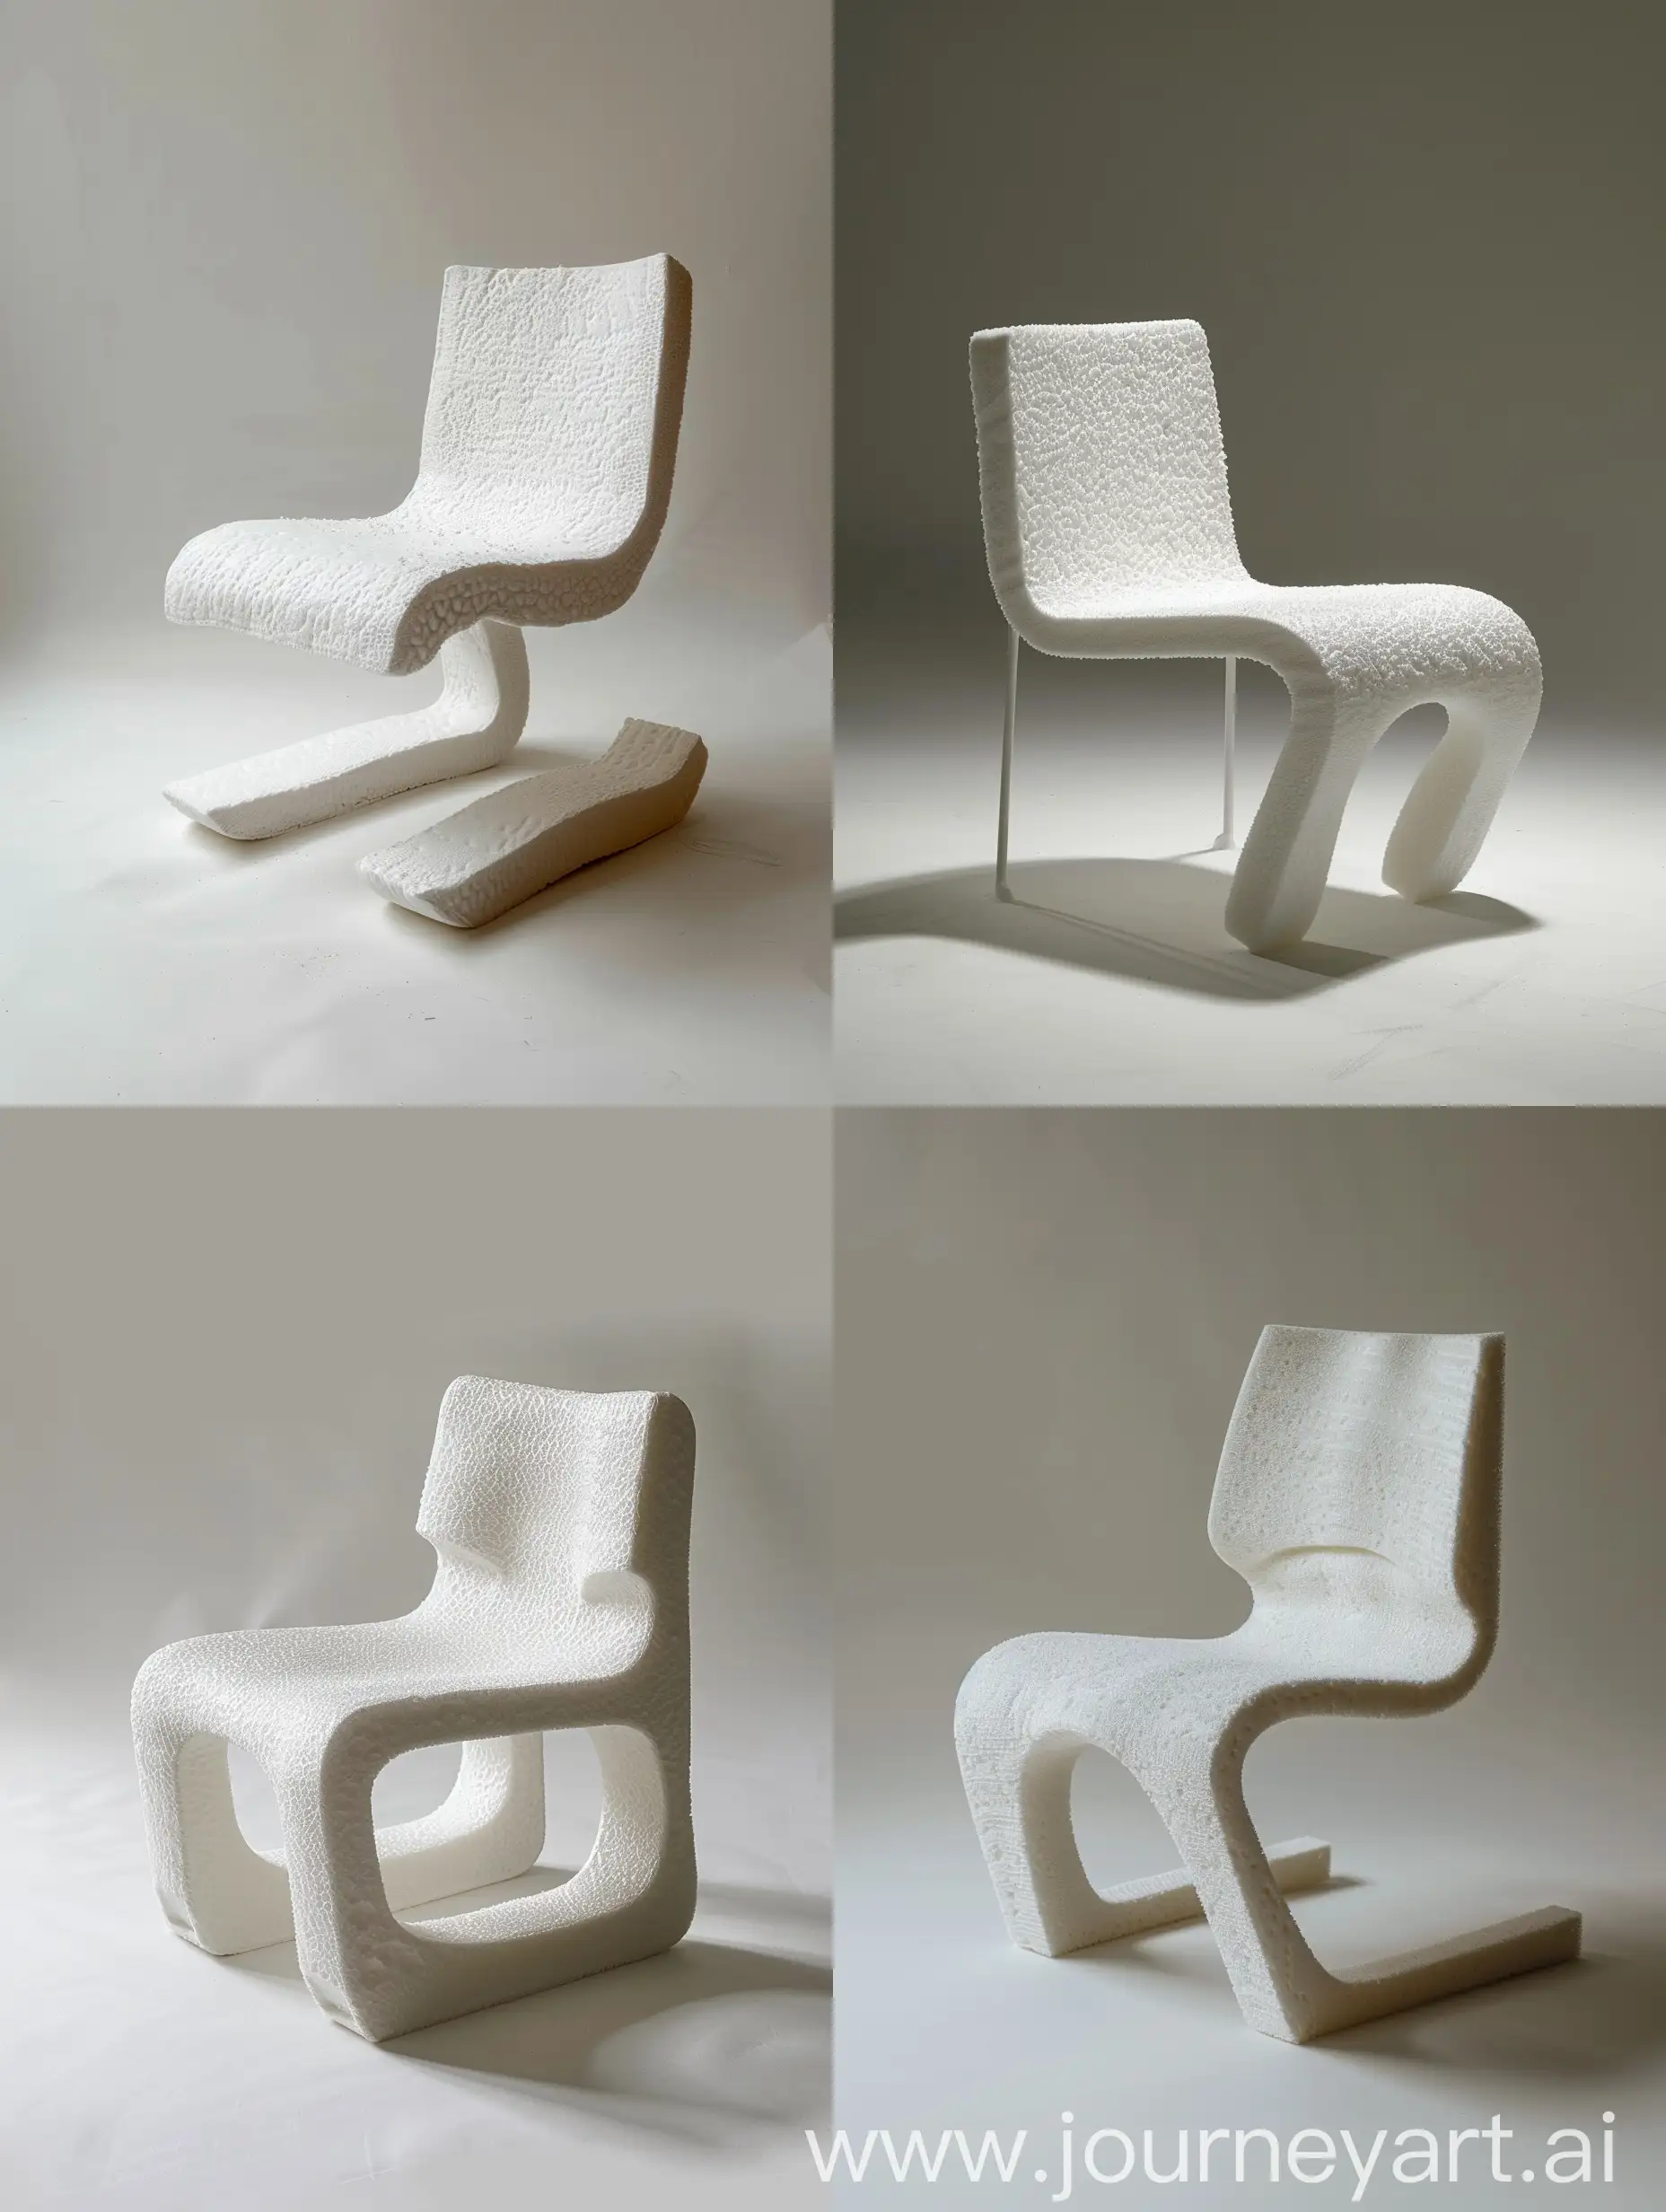 Design a minimal chair with Styrofoam